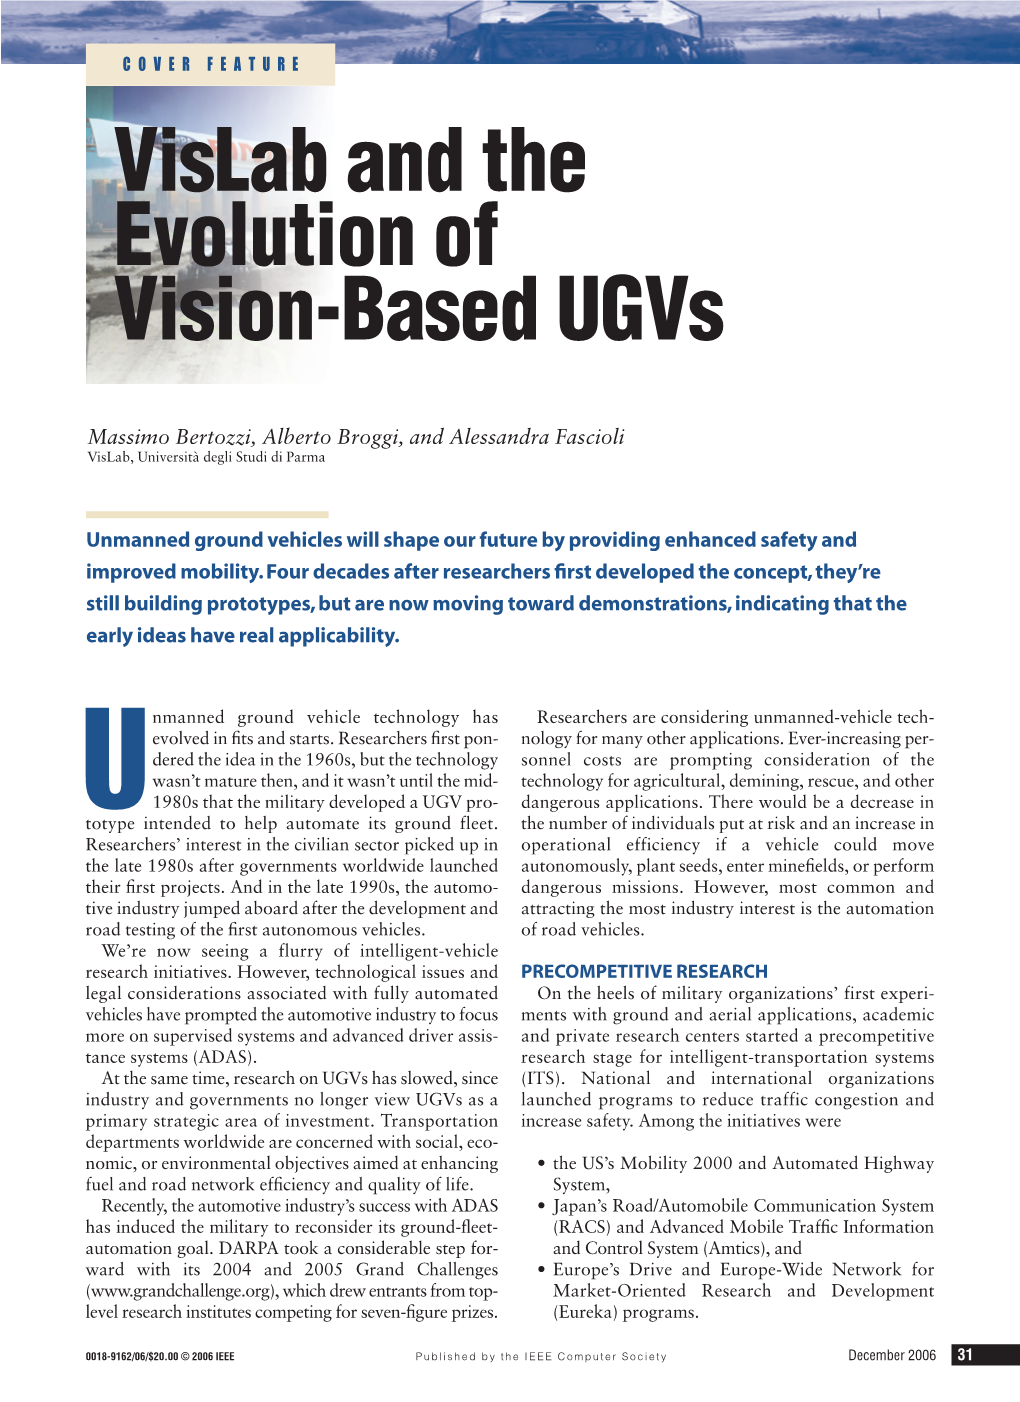 Vislab and the Evolution of Vision-Based Ugvs